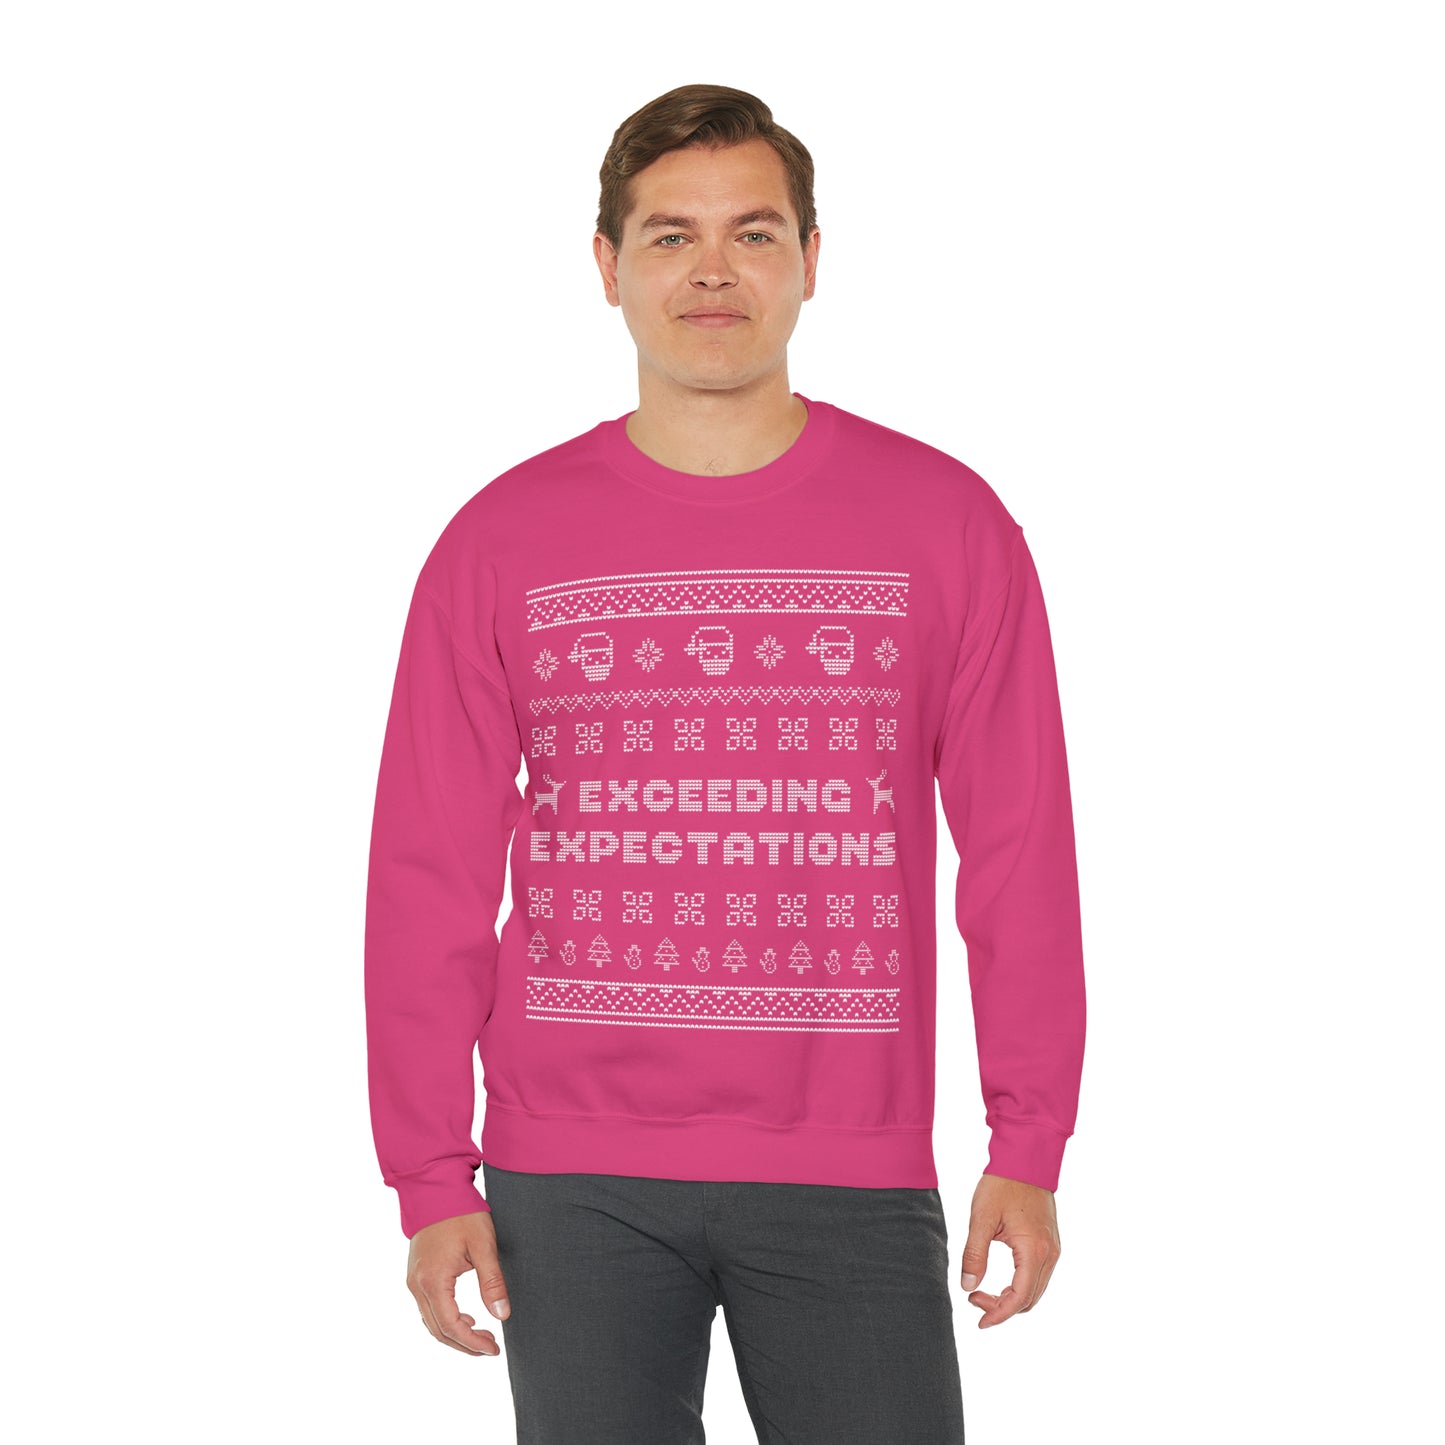 Exceeding Expectations Ugly Sweater Sweatshirt